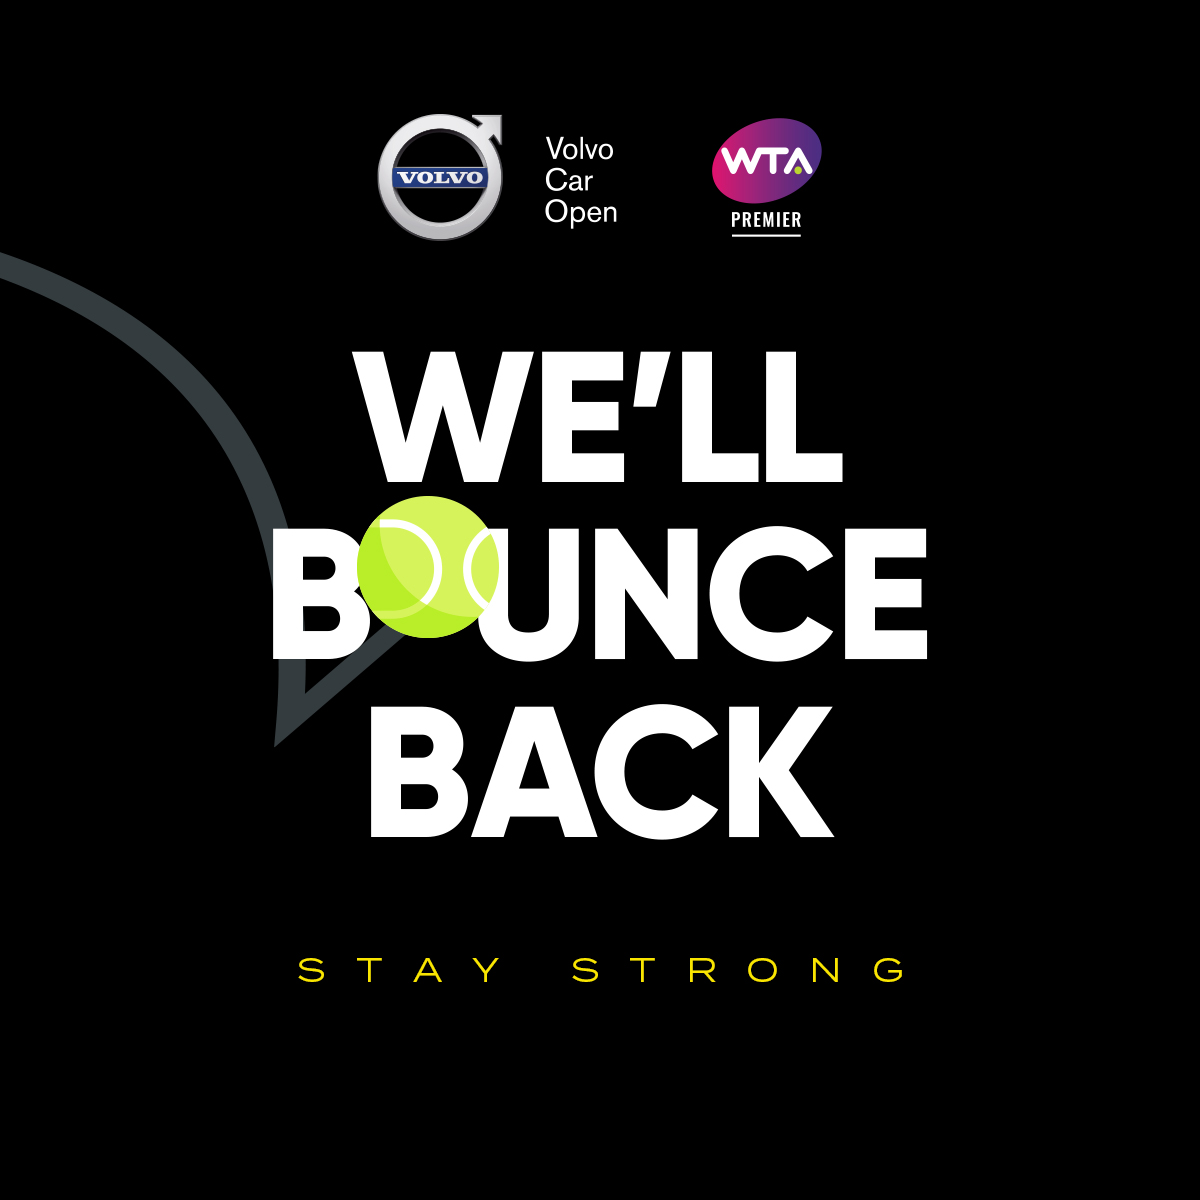 We’ll bounce back